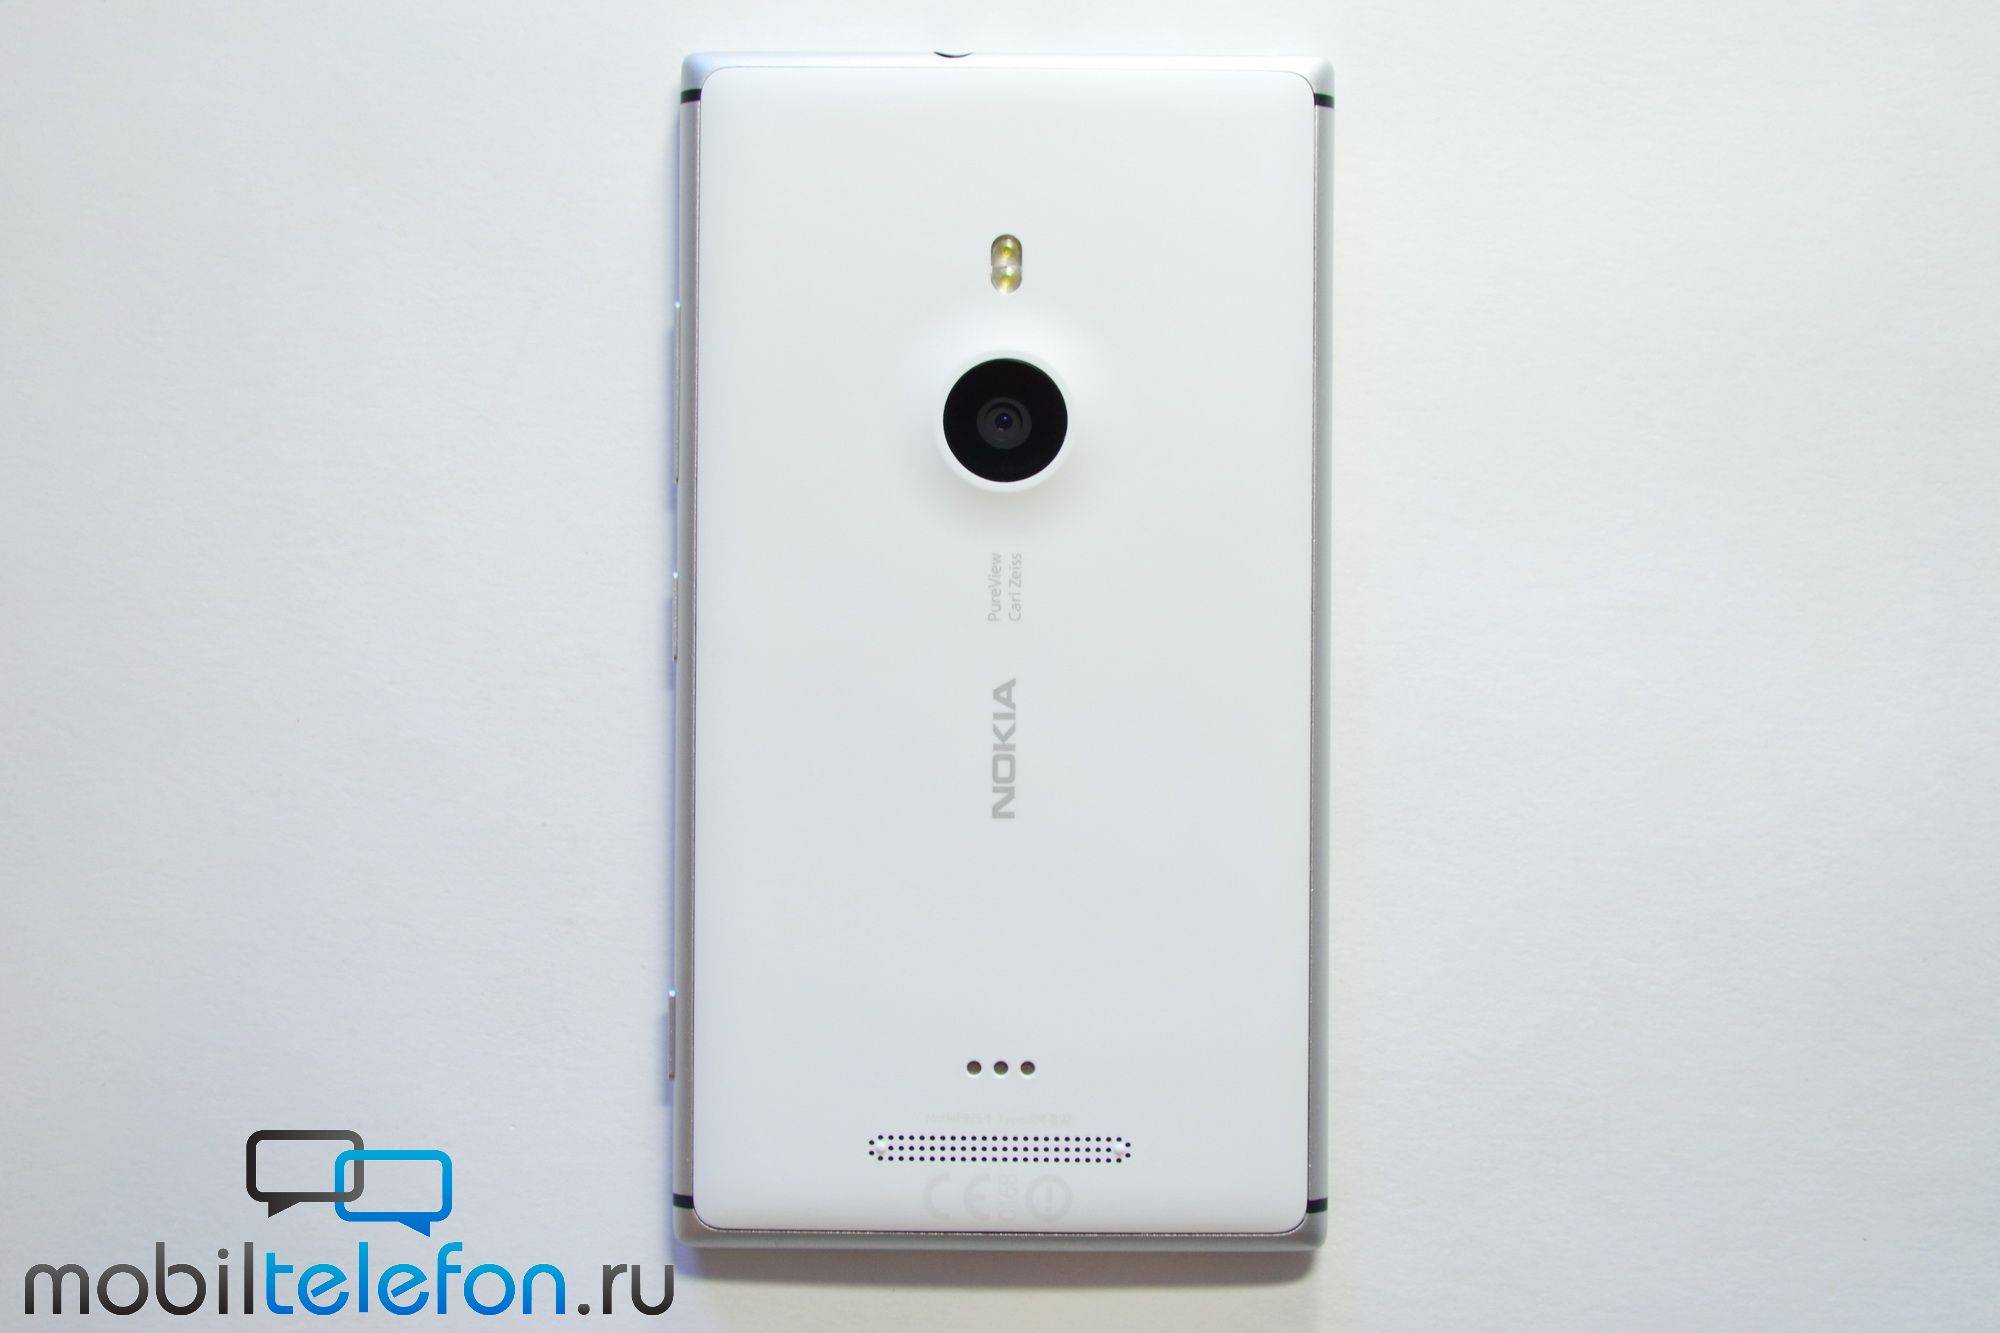 Обзор: nokia lumia 925 - тоньше, легче, ярче